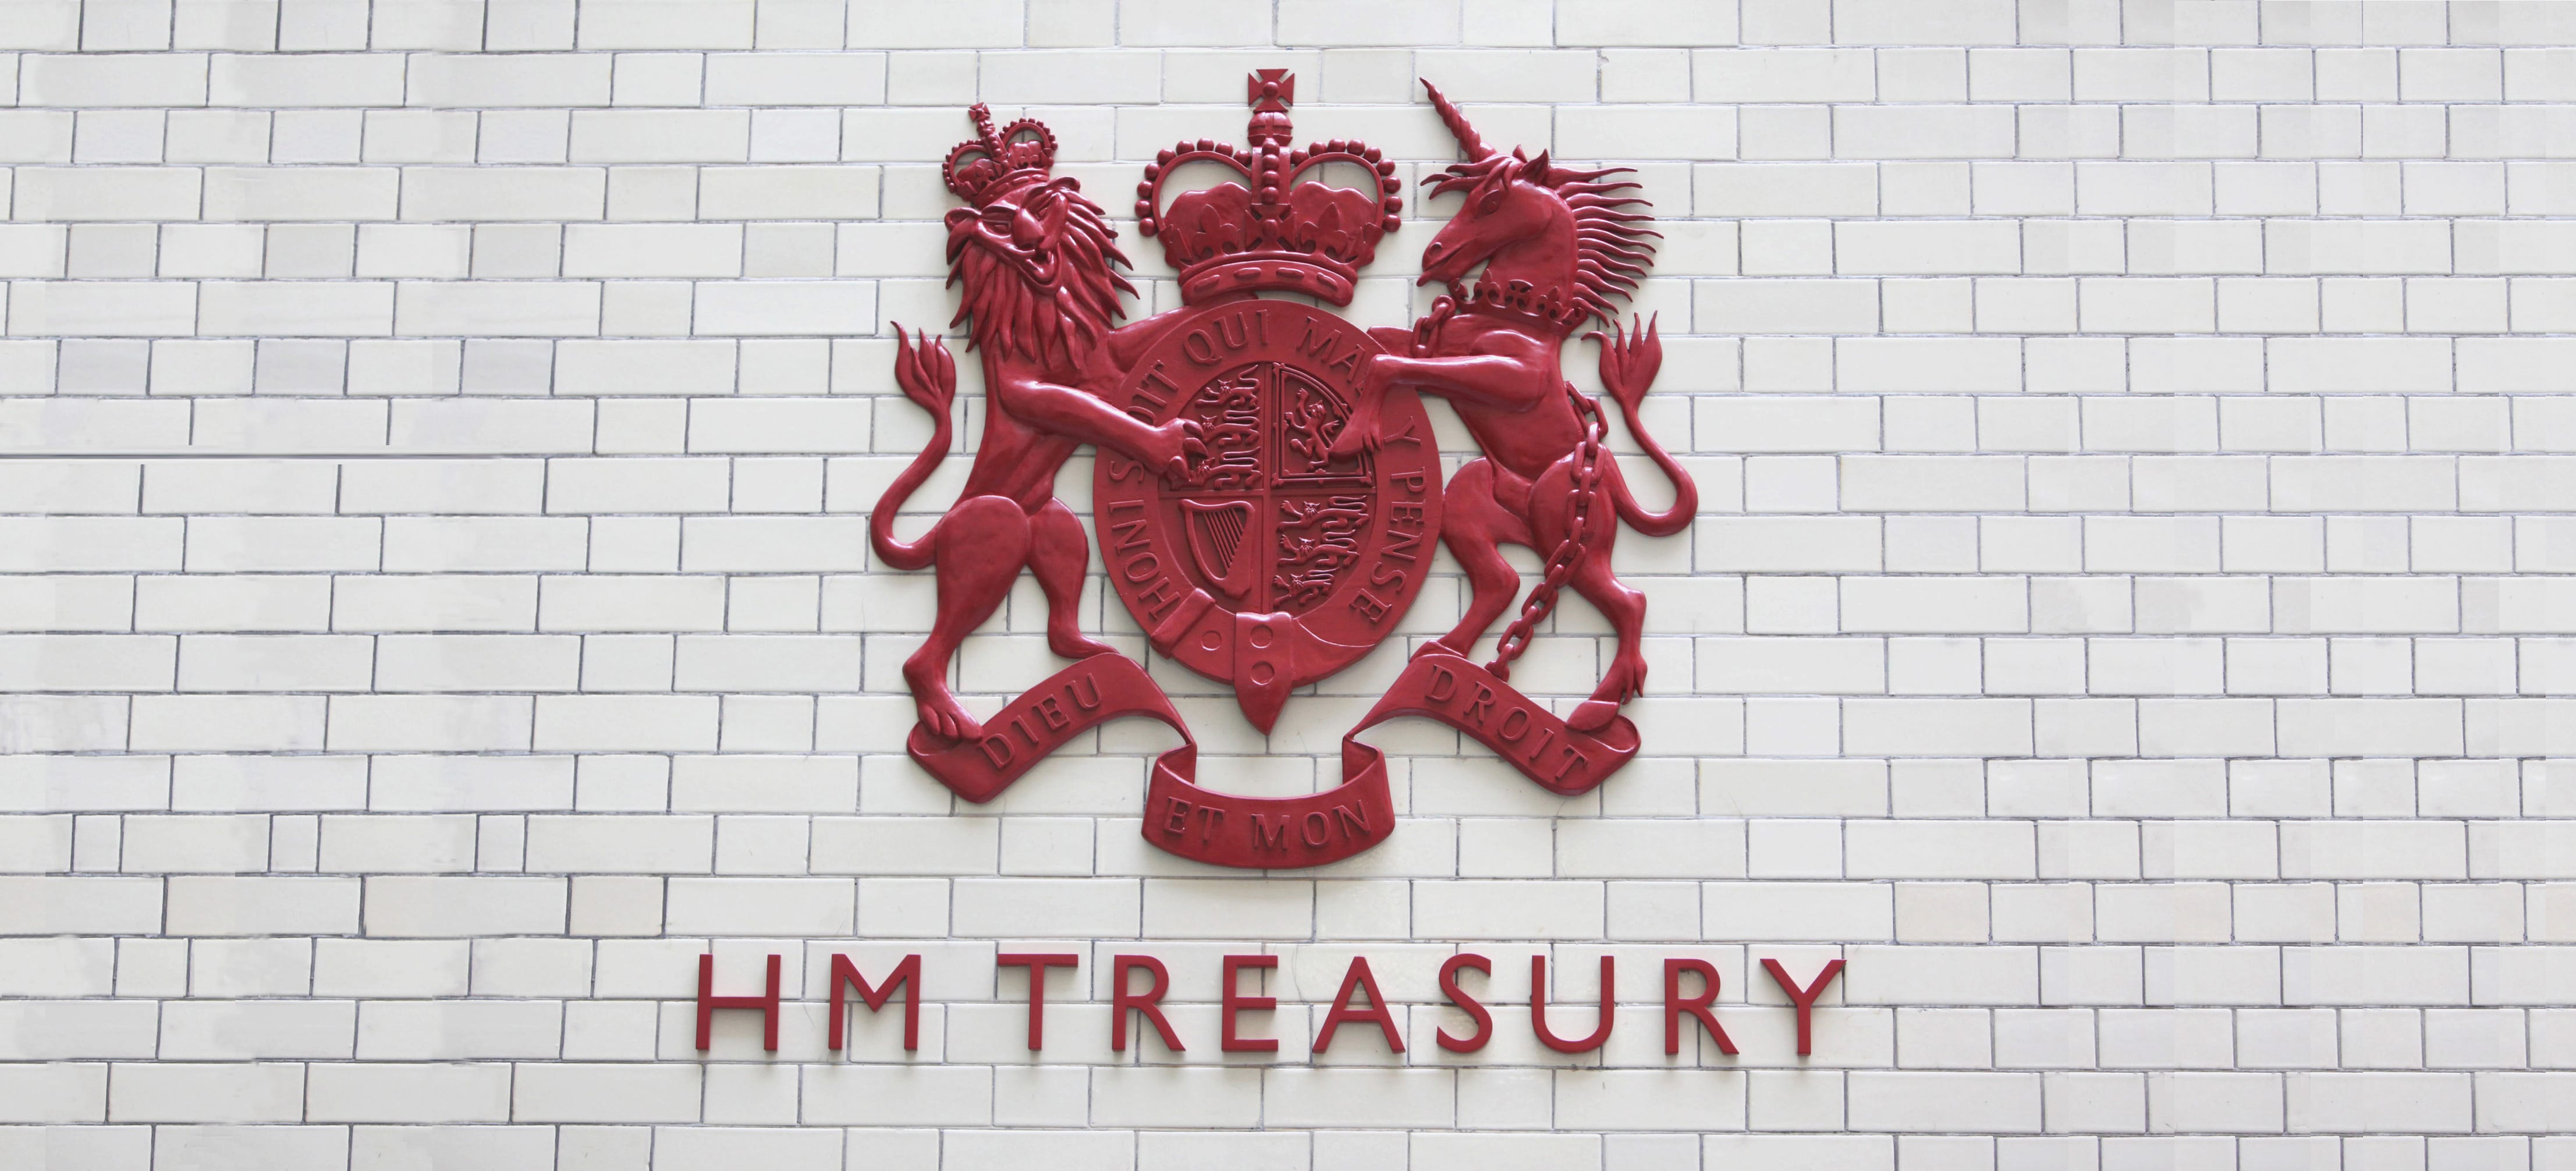 HM-Treasury-image-for-header_880-400